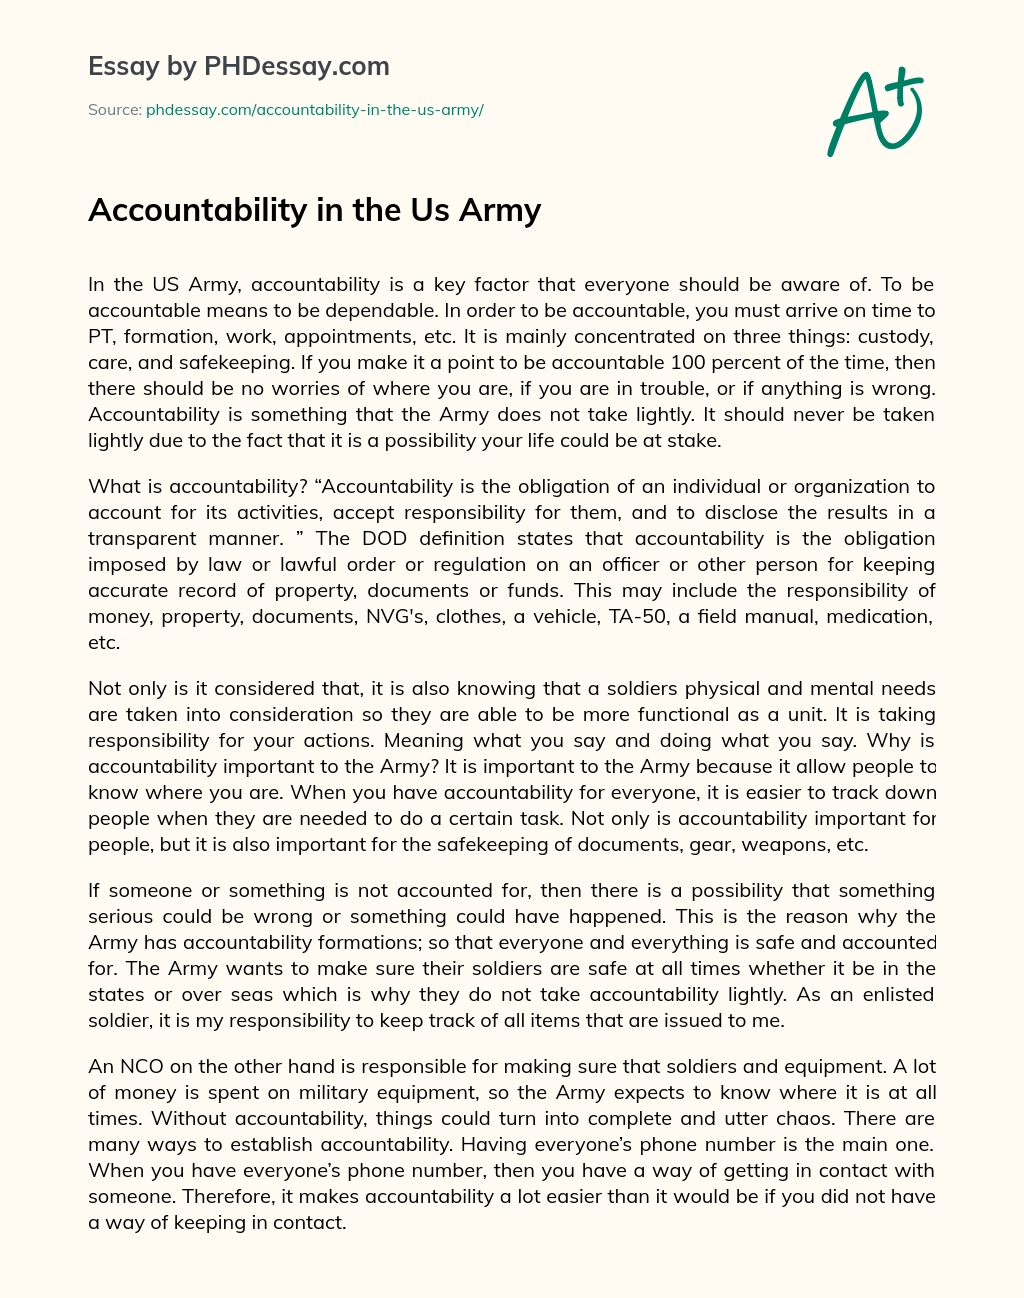 Accountability in the Us Army essay